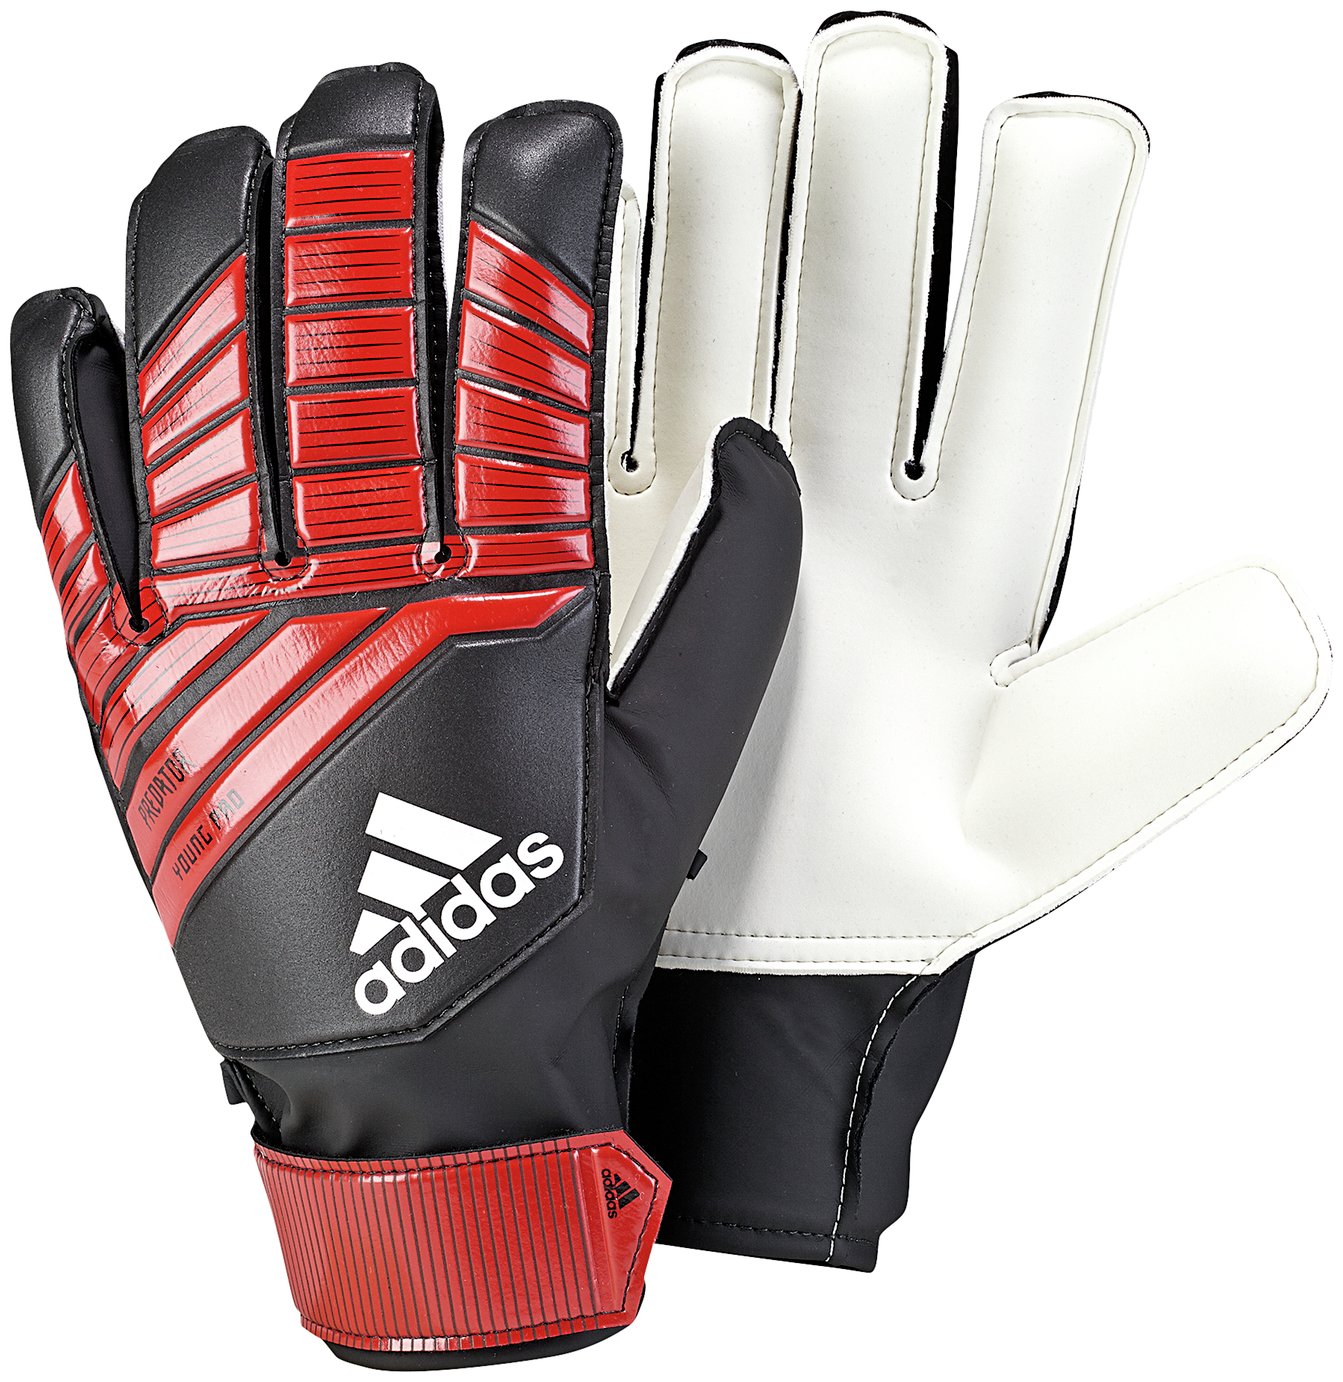 Adidas Predator Goalkeeper Gloves